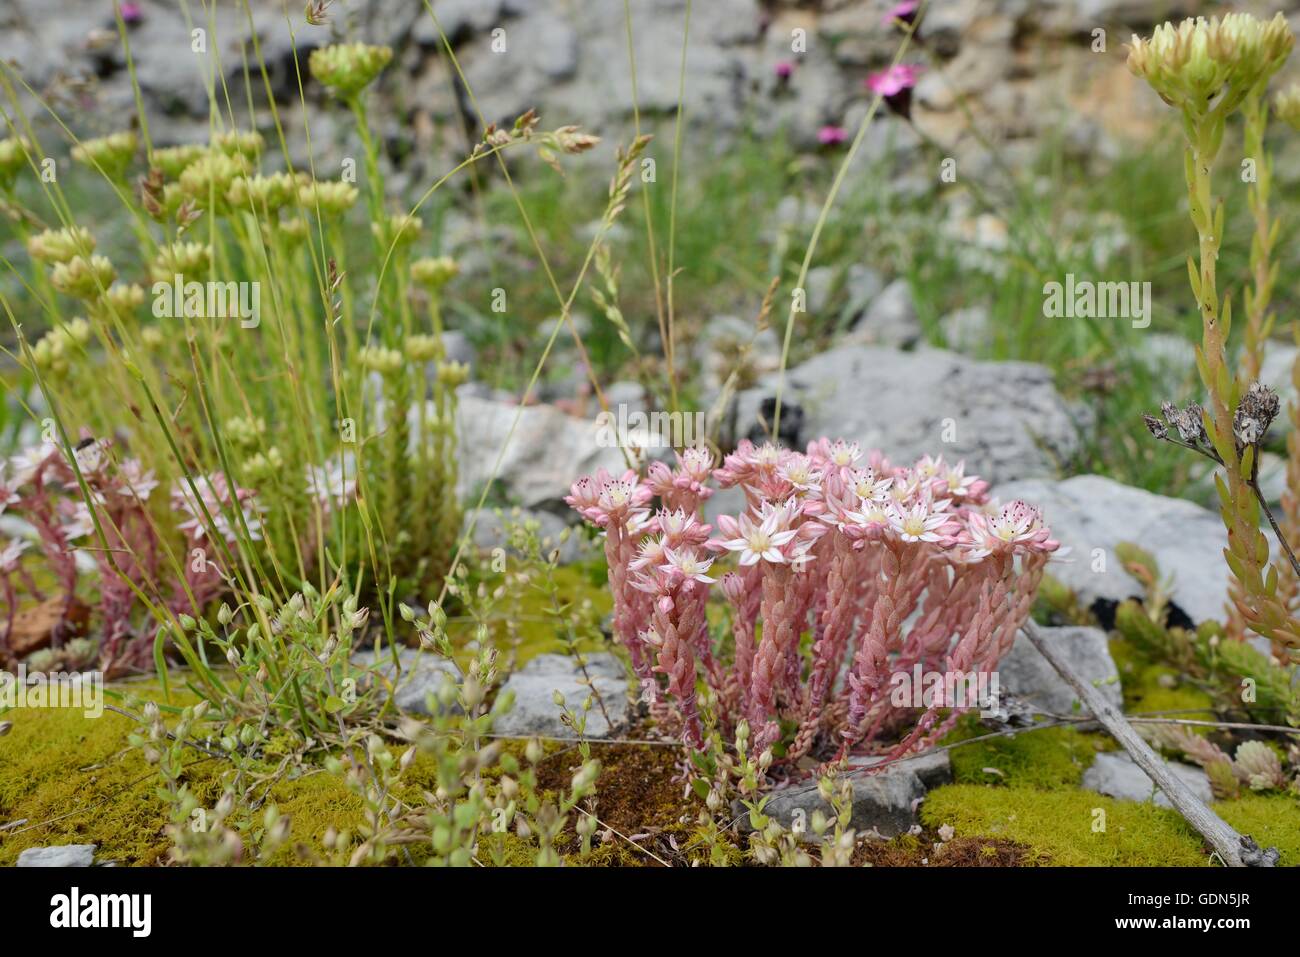 Spanish stonecrop (Sedum hispanicum) and European stonecrop (Sedum ochroleucum) clumps flowering among limestone rocks and scree Stock Photo